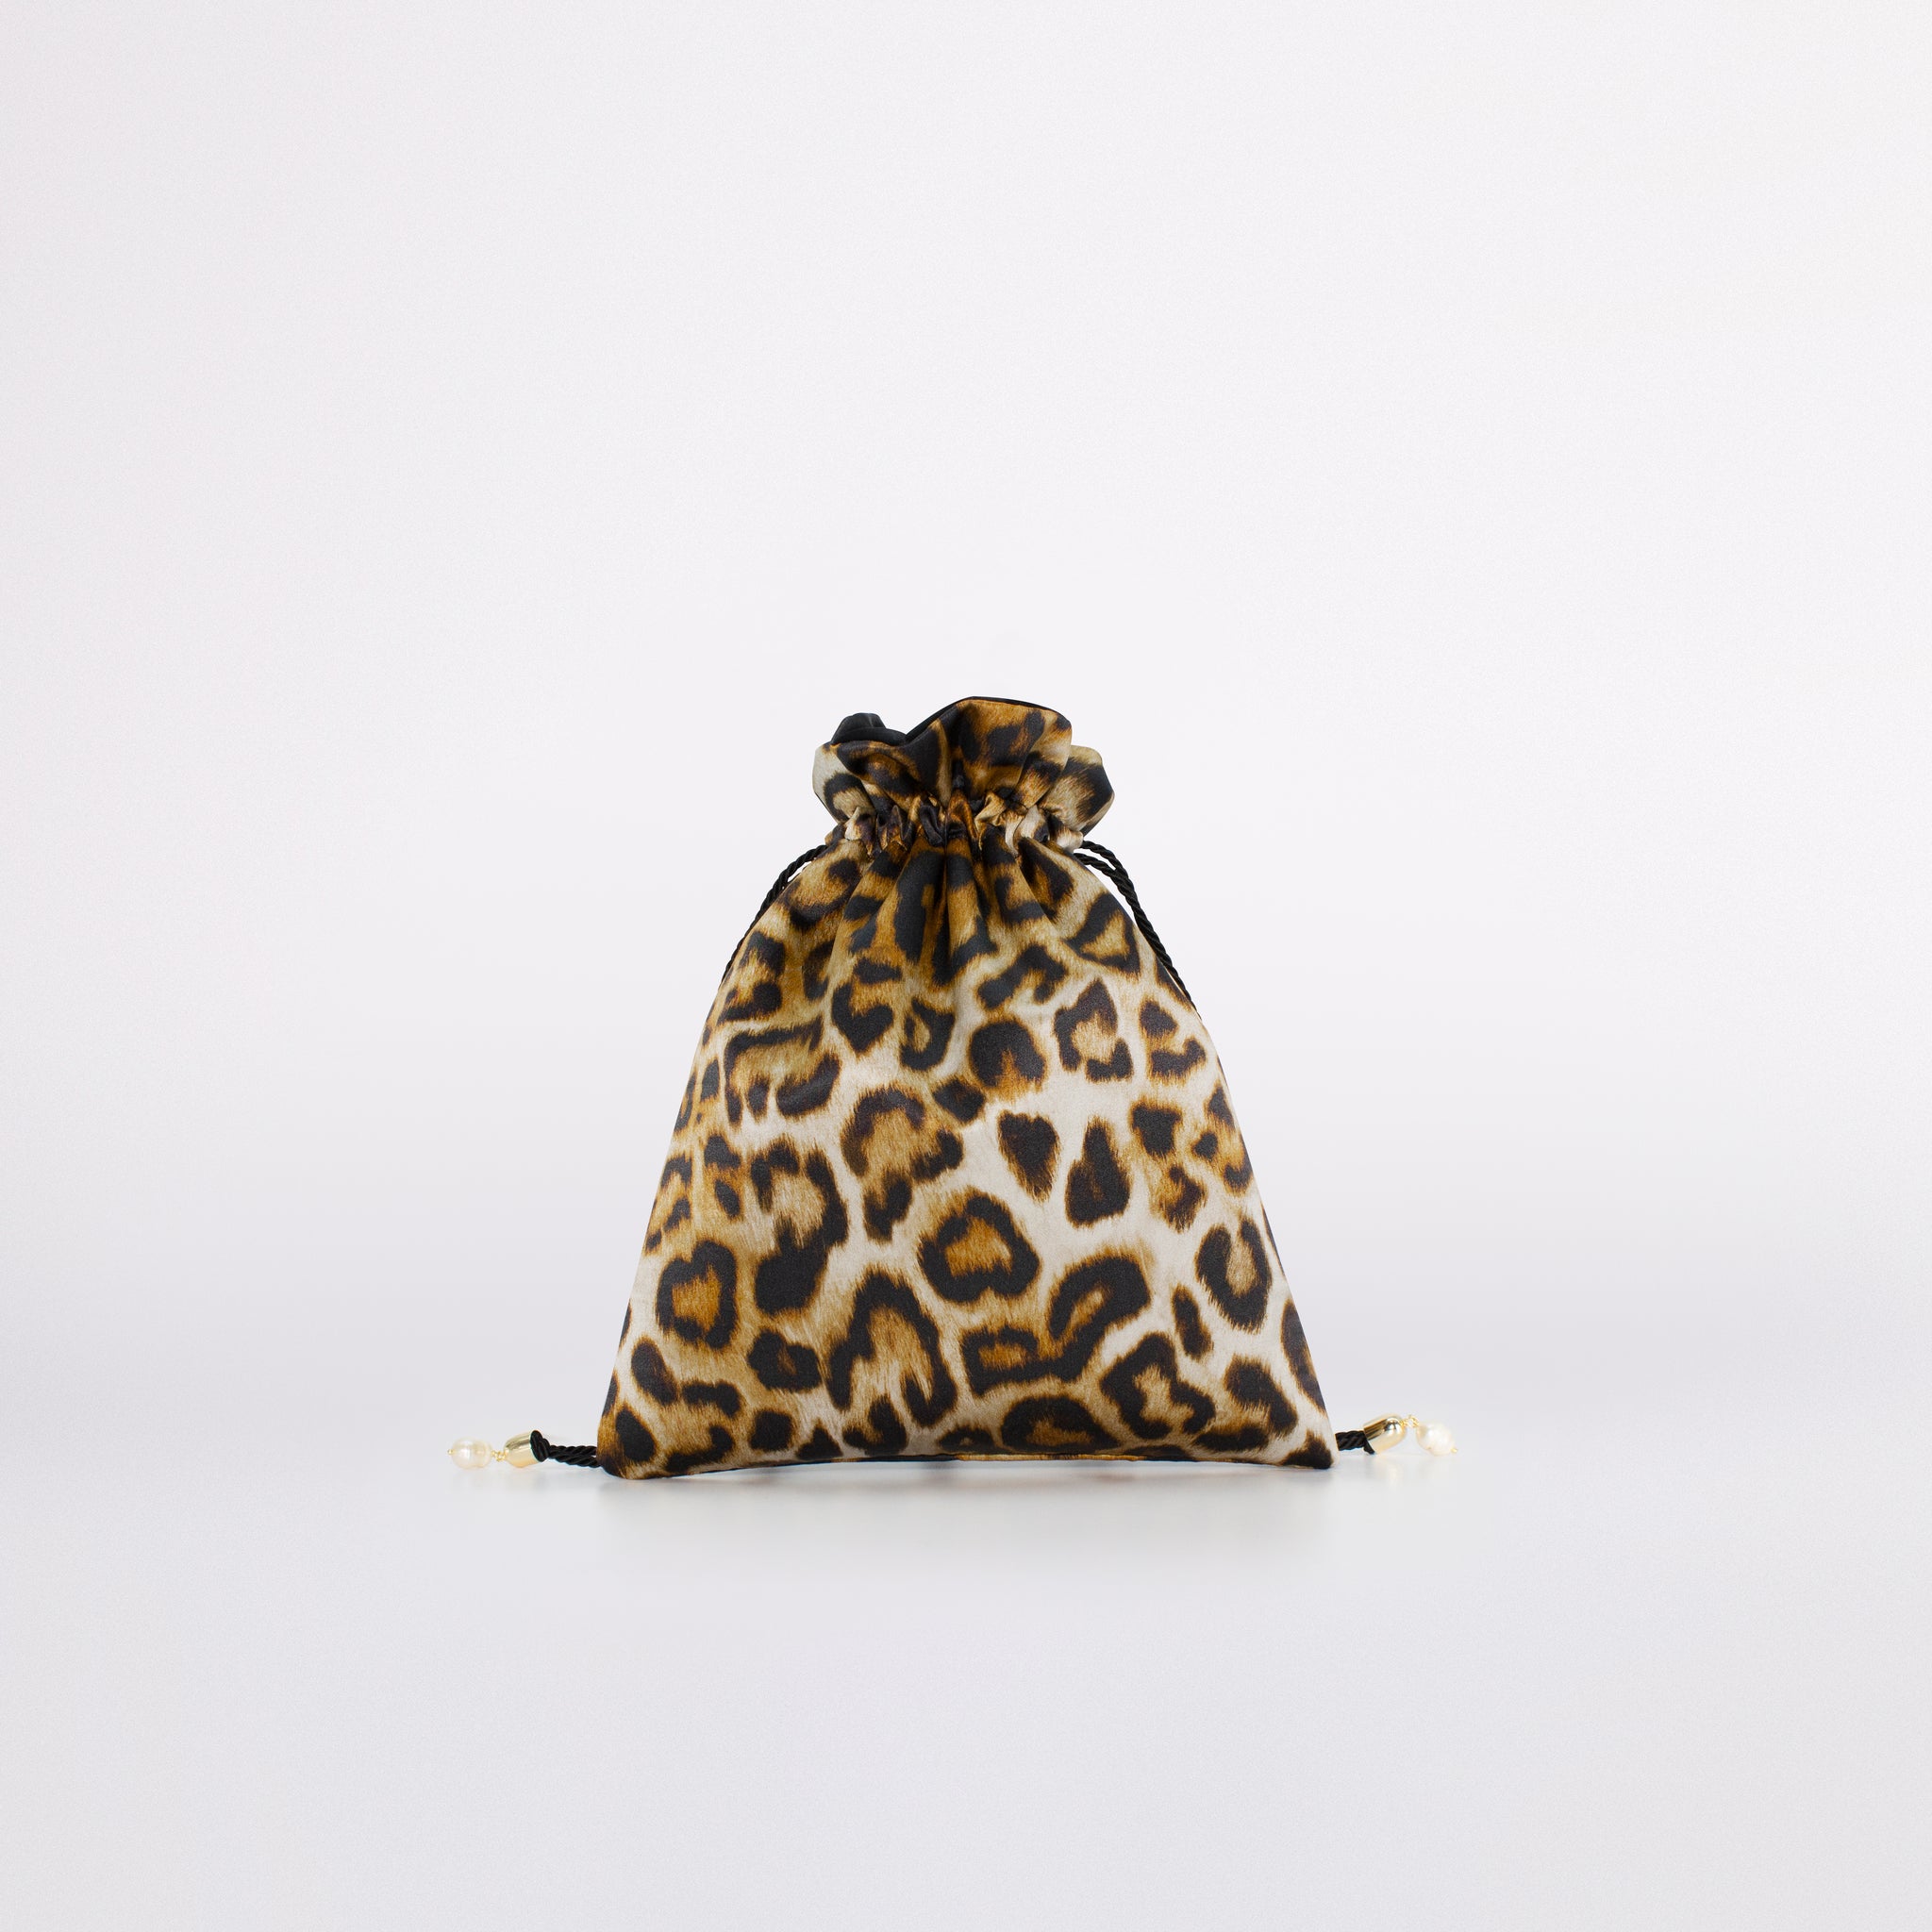 La Leopard Silk in versione flat